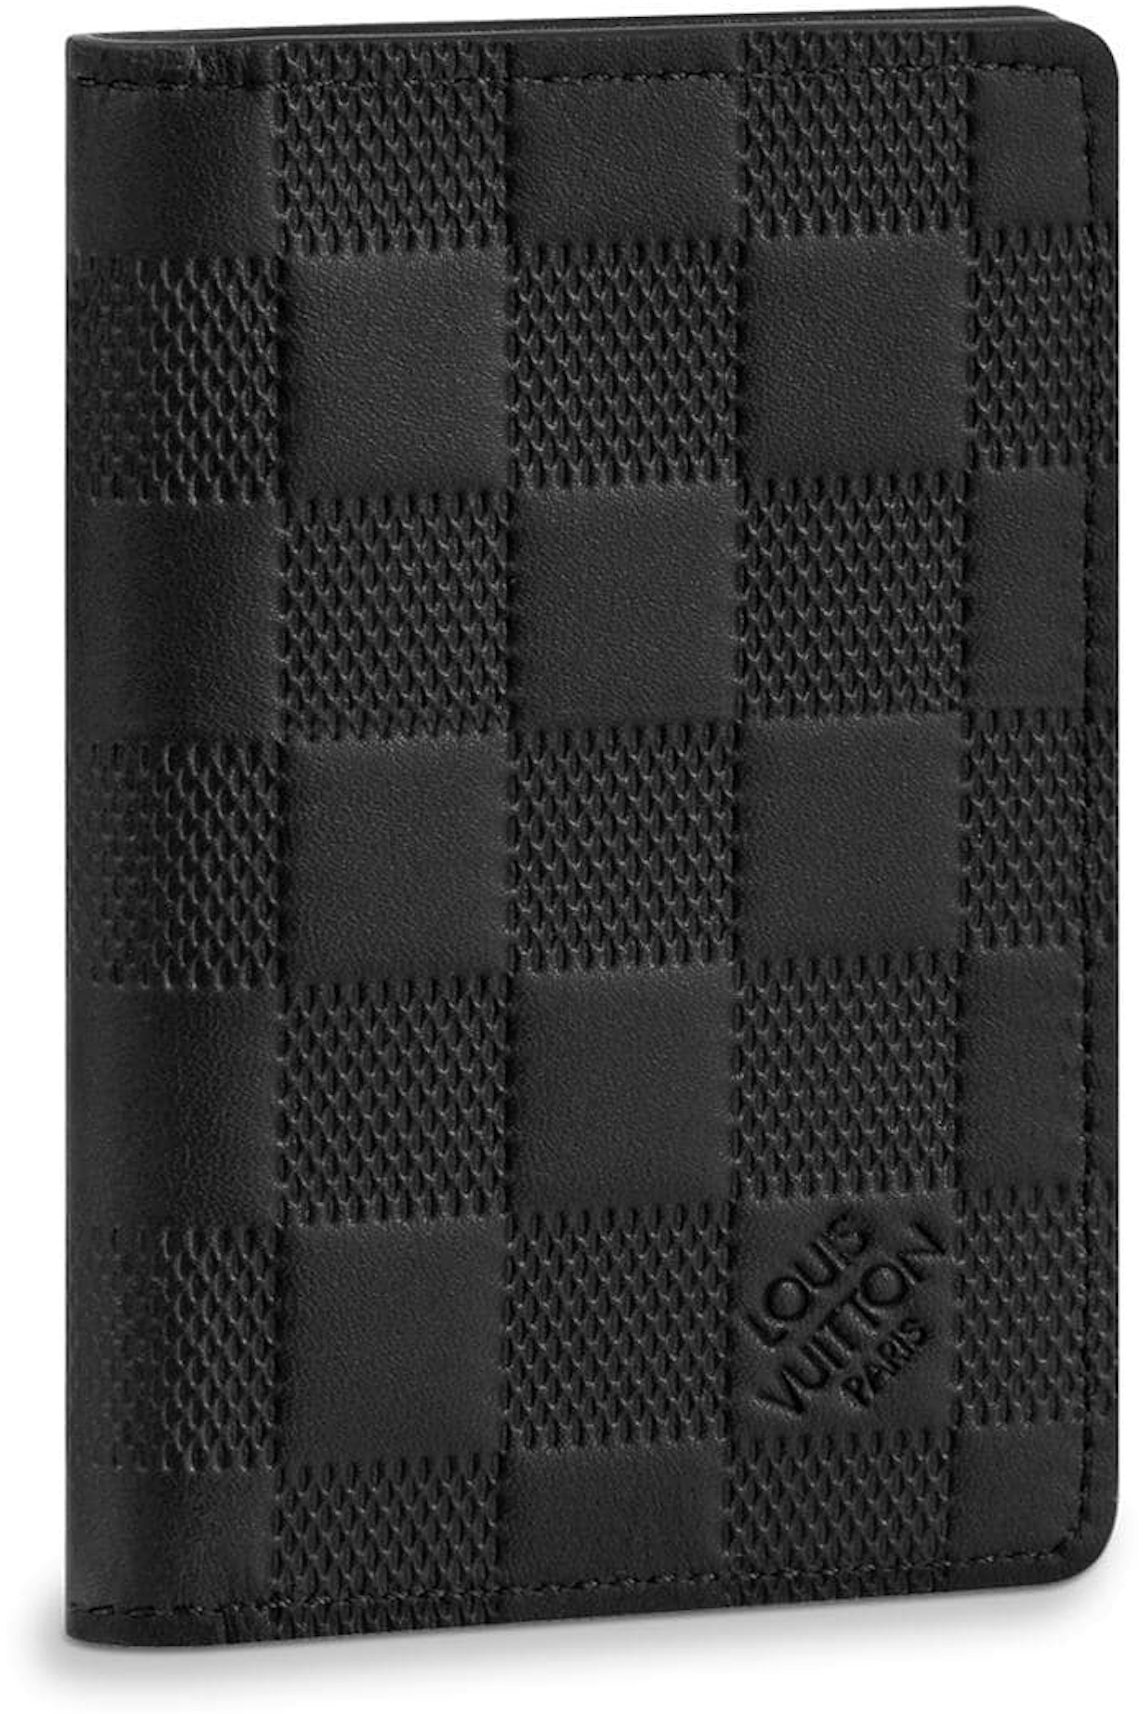 Louis Vuitton Half Damier Pocket Polo BLACK. Size S0